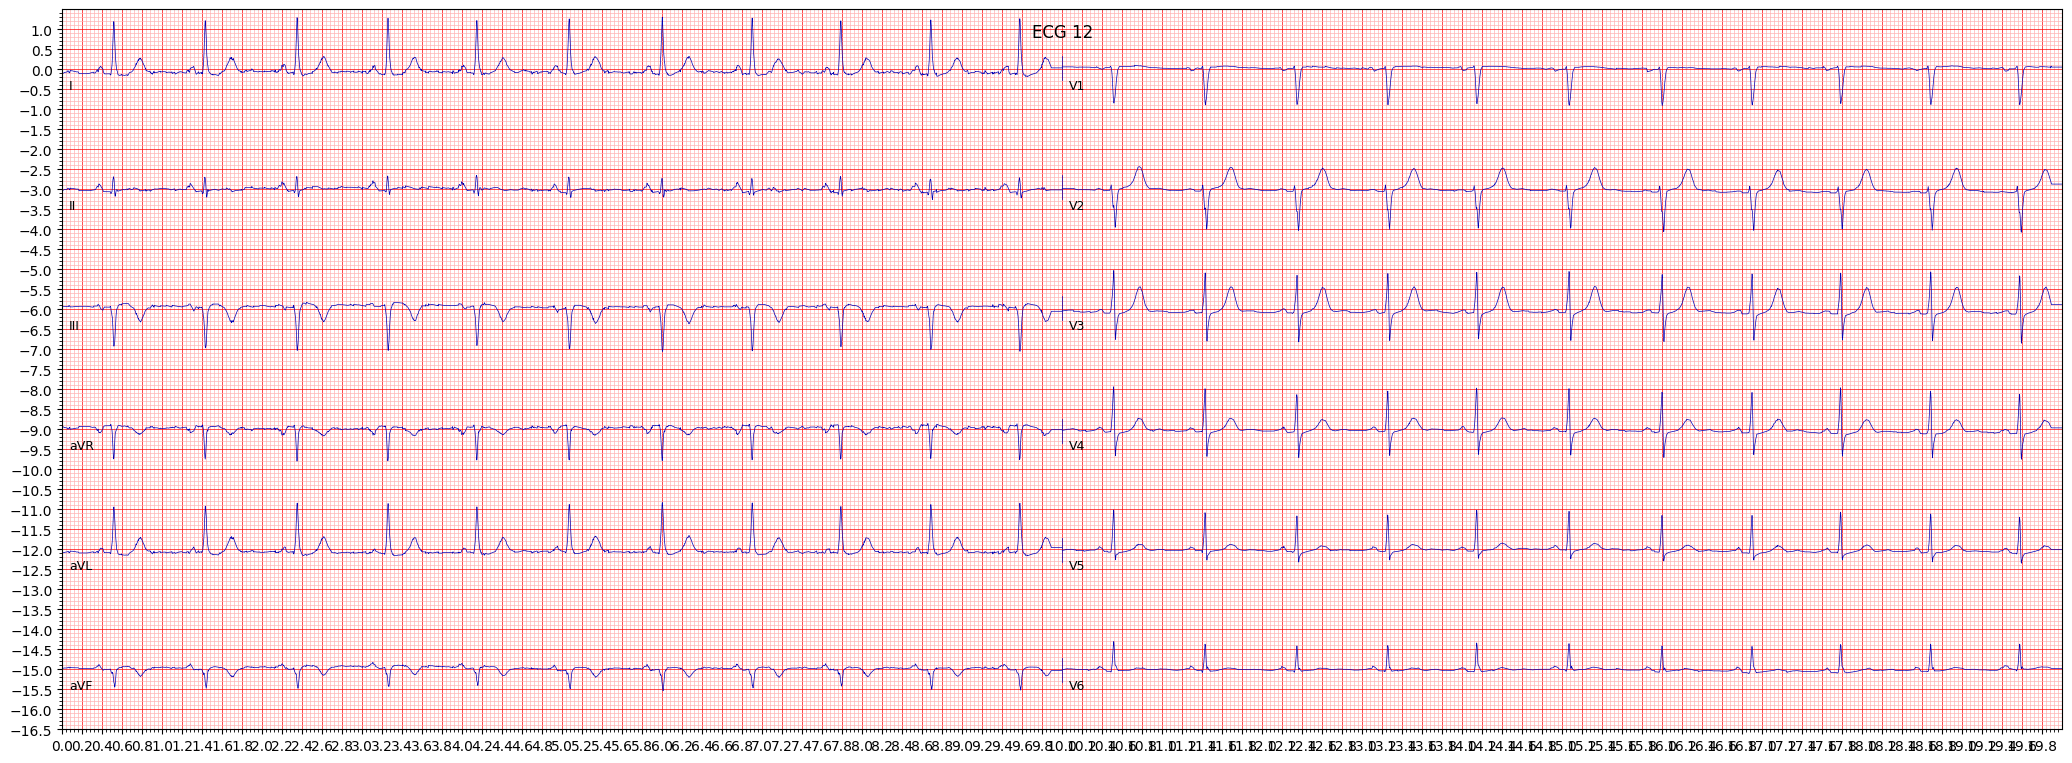 inferior myocardial infarction (IMI) example 1737